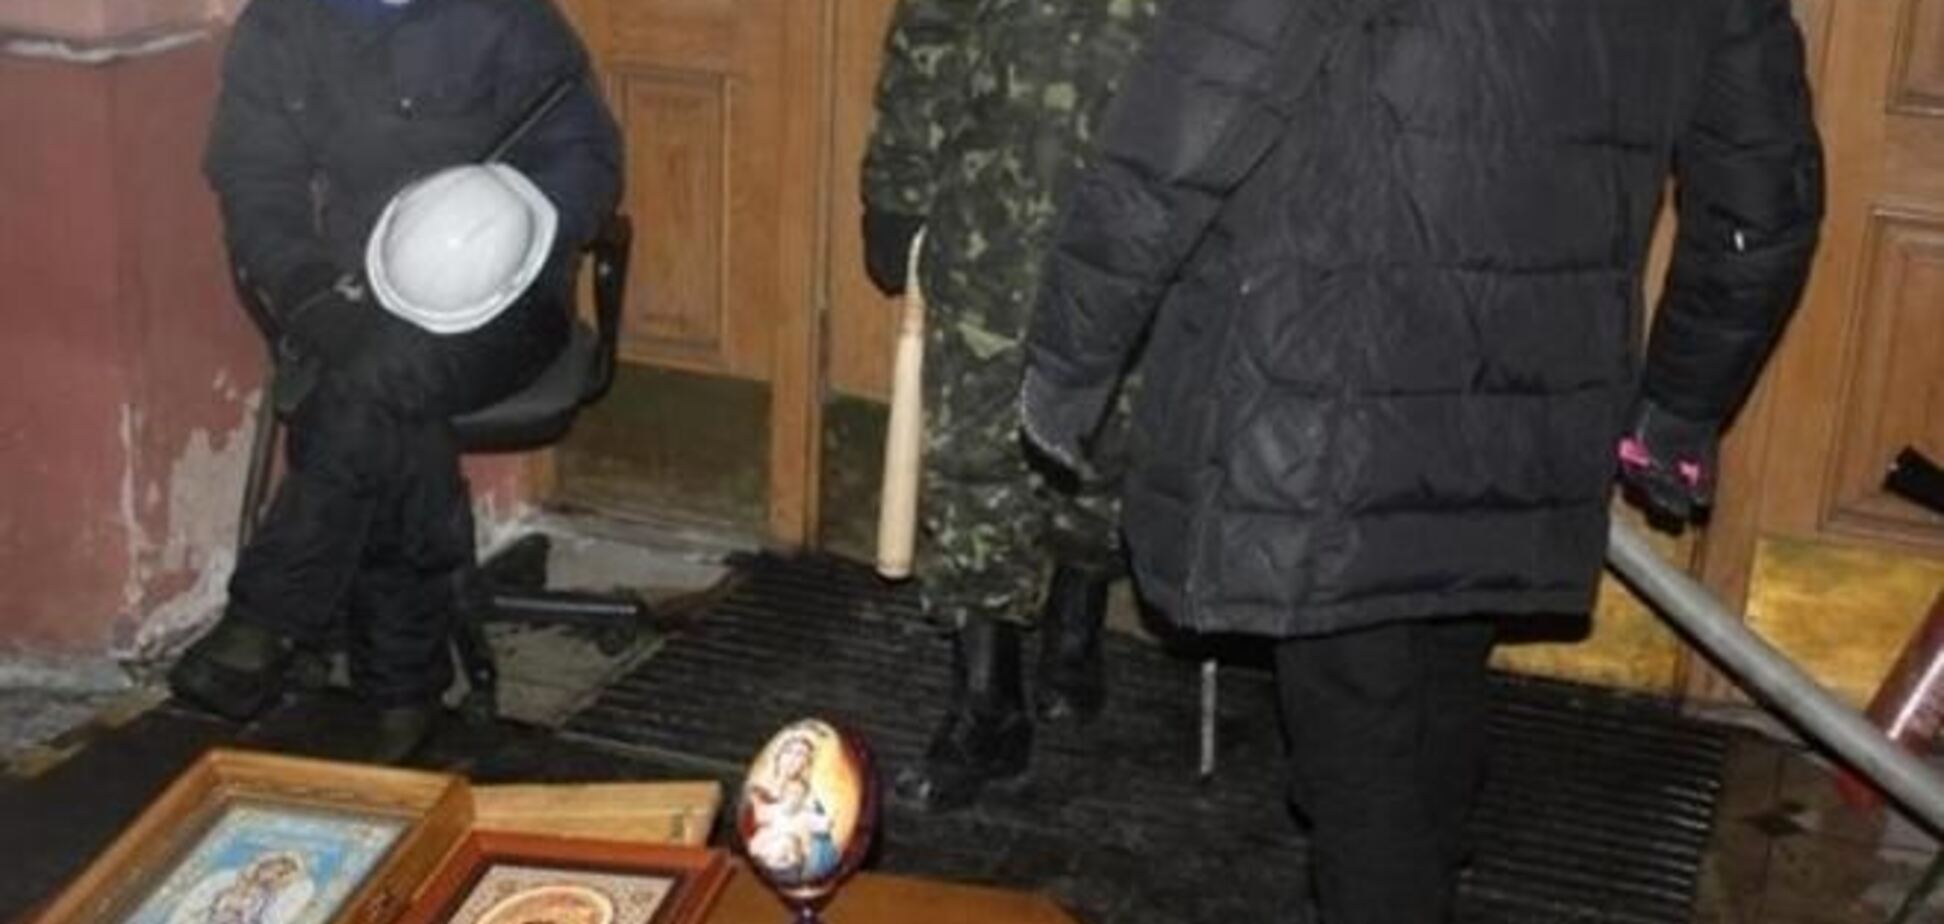 Активисты не пустят работников Минюста в здание из-за заявления Лукаш - СМИ